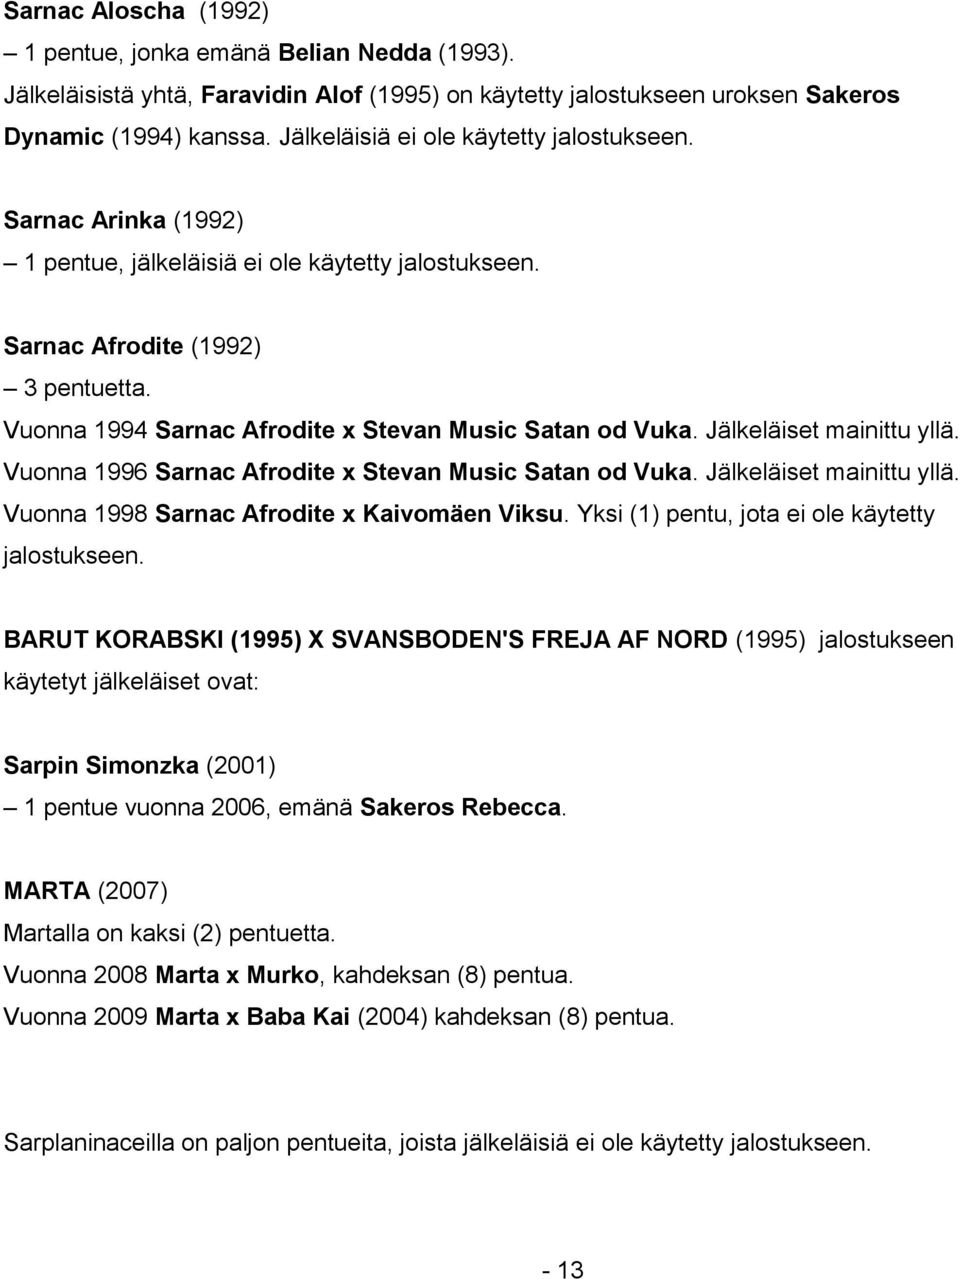 Vuonna 1994 Sarnac Afrodite x Stevan Music Satan od Vuka. Jälkeläiset mainittu yllä. Vuonna 1996 Sarnac Afrodite x Stevan Music Satan od Vuka. Jälkeläiset mainittu yllä. Vuonna 1998 Sarnac Afrodite x Kaivomäen Viksu.